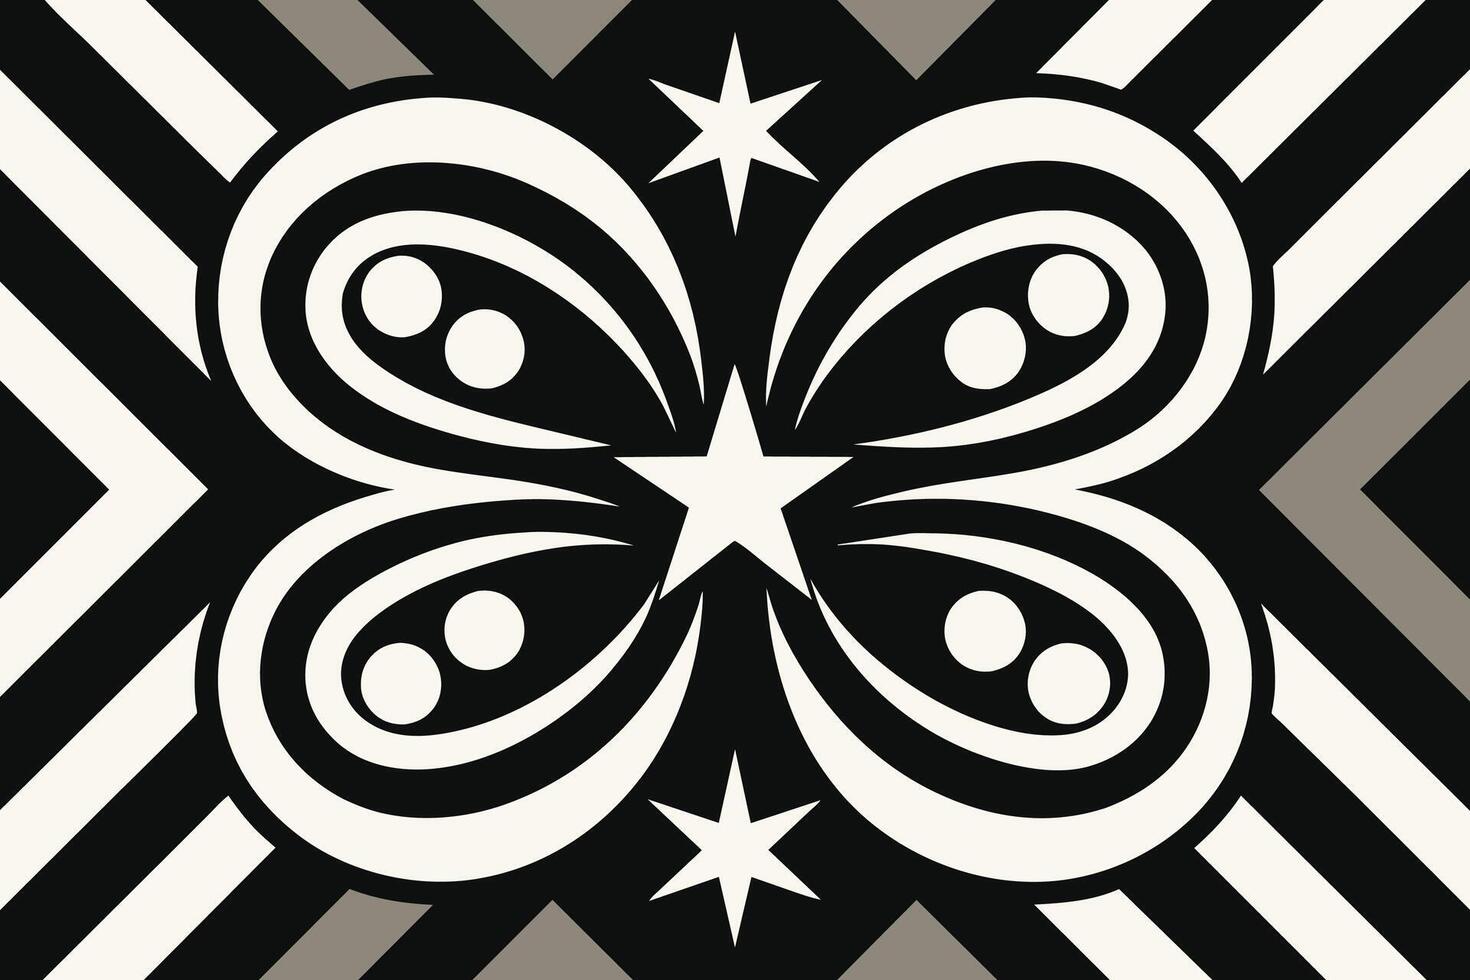 monochrome background with retro pattern design vector